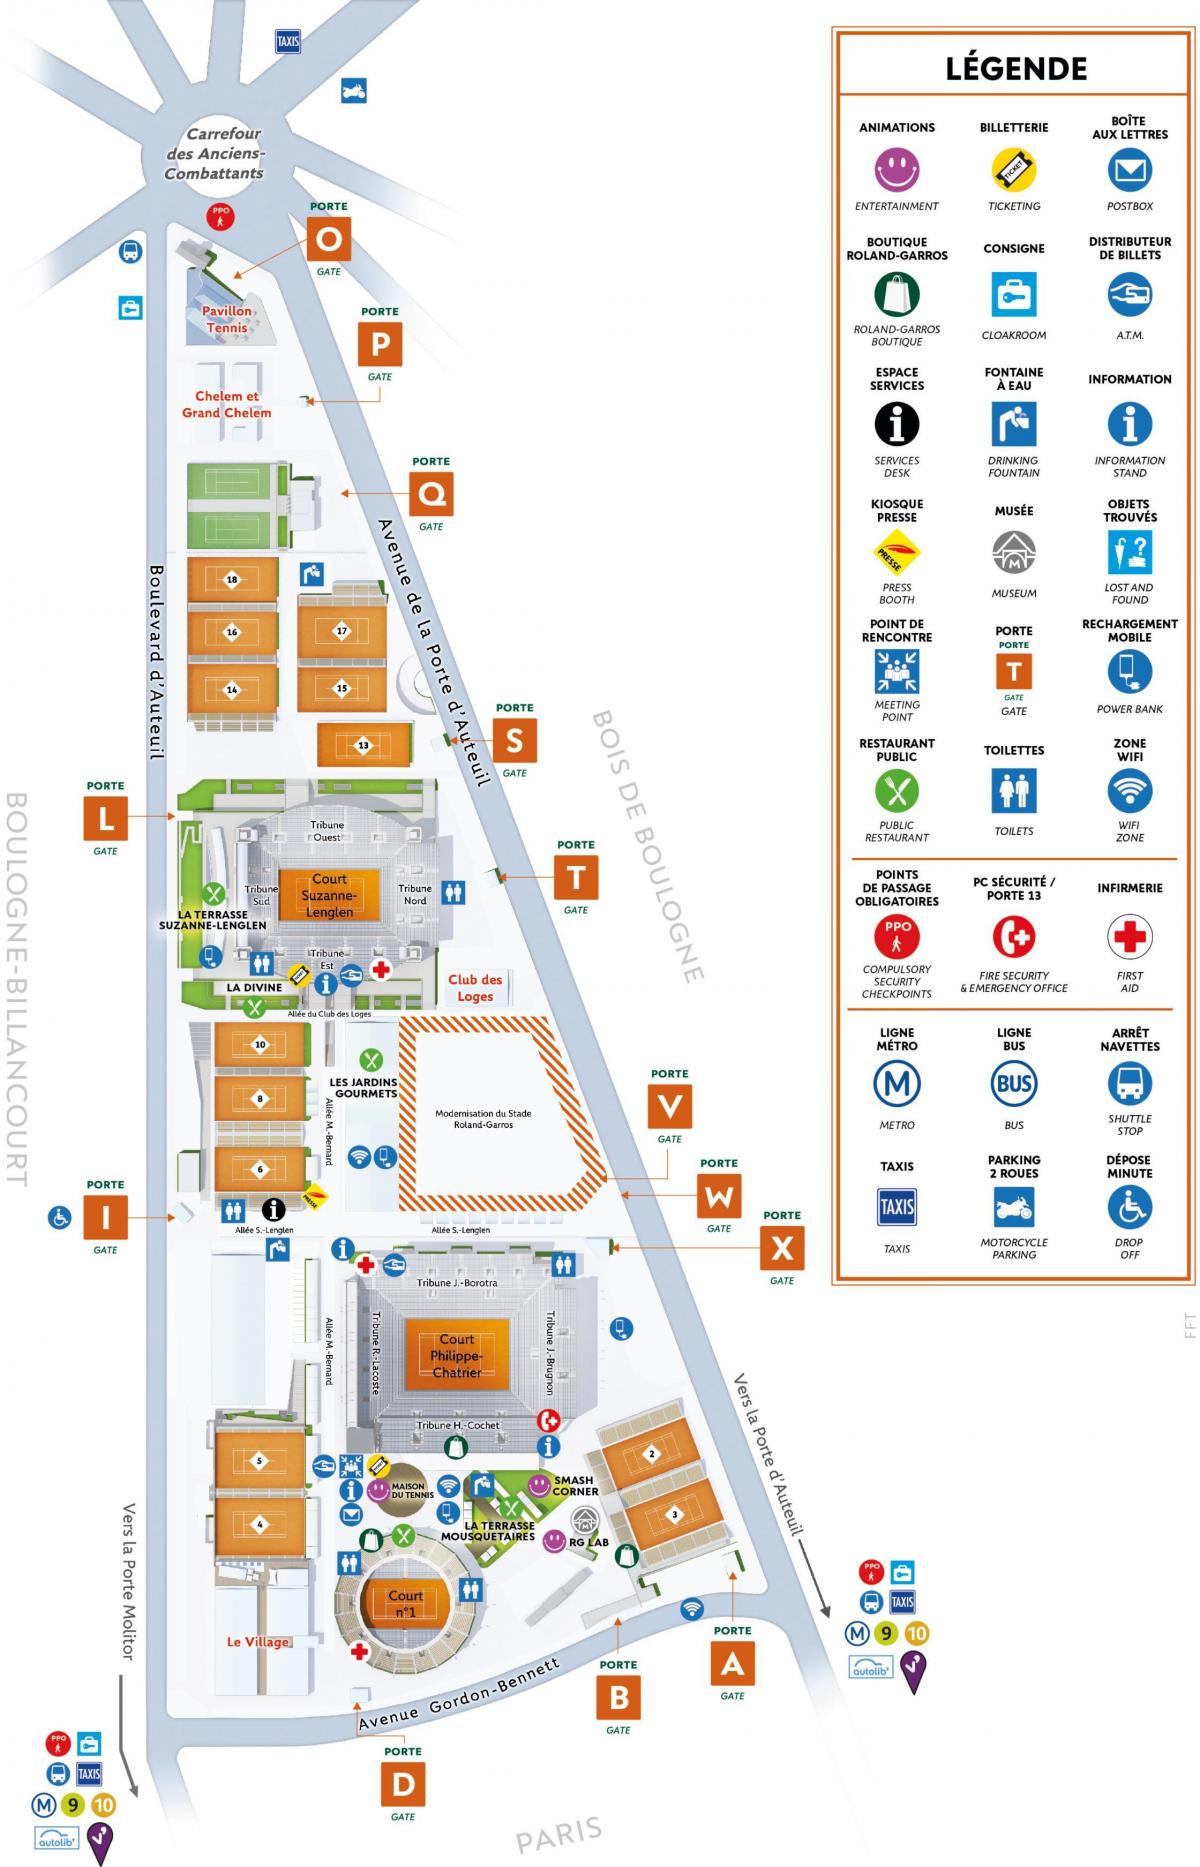 Peta dari Roland Garros